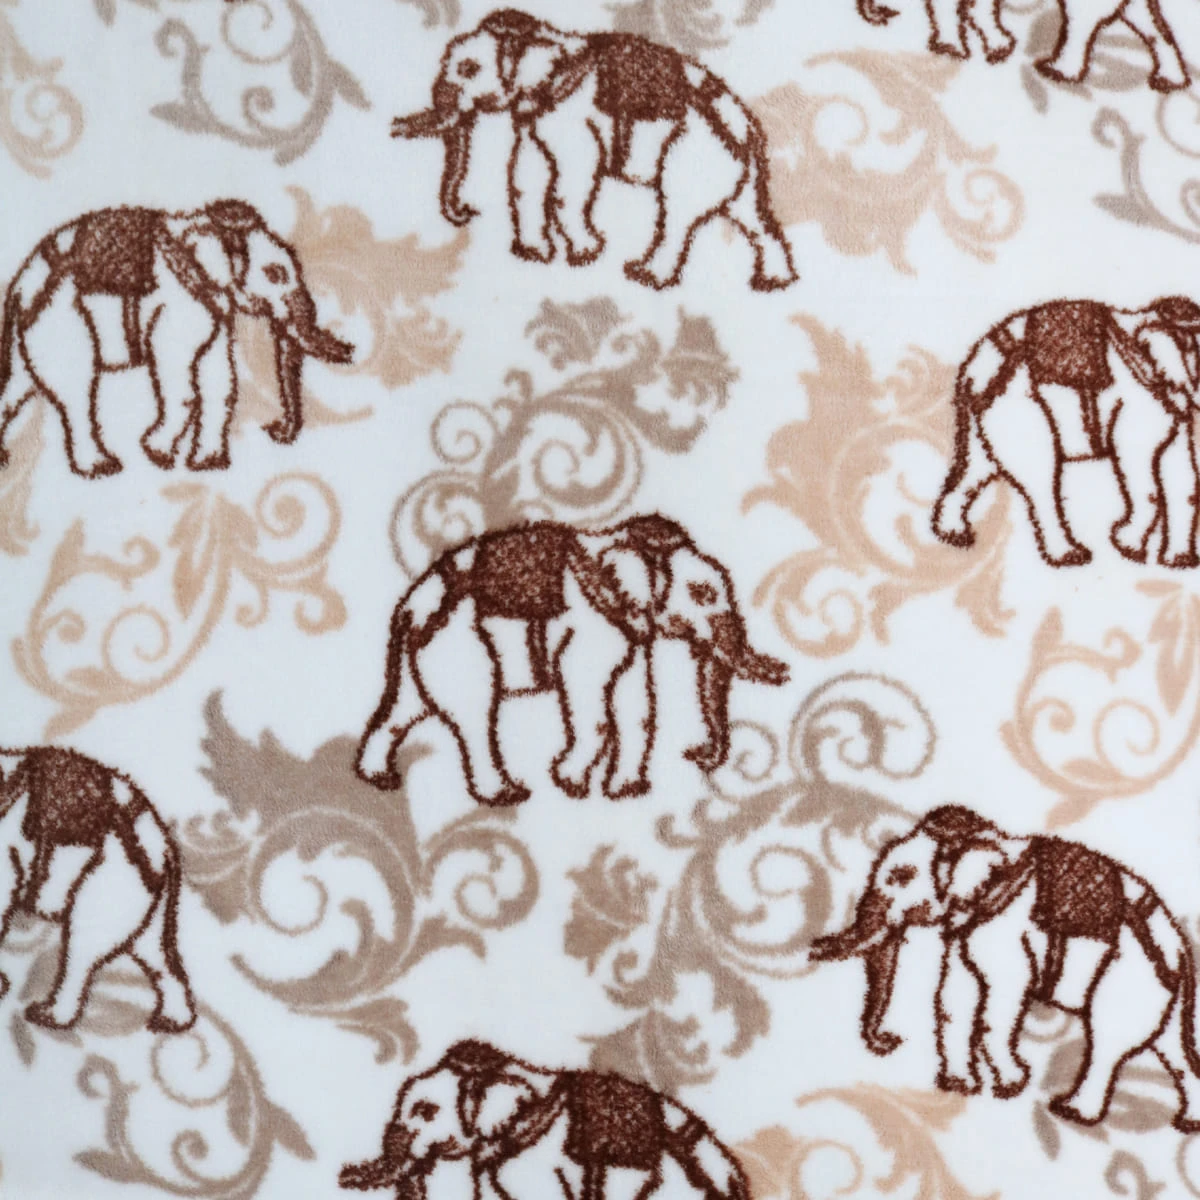 Thai Elephanet Printed Plush Blanket